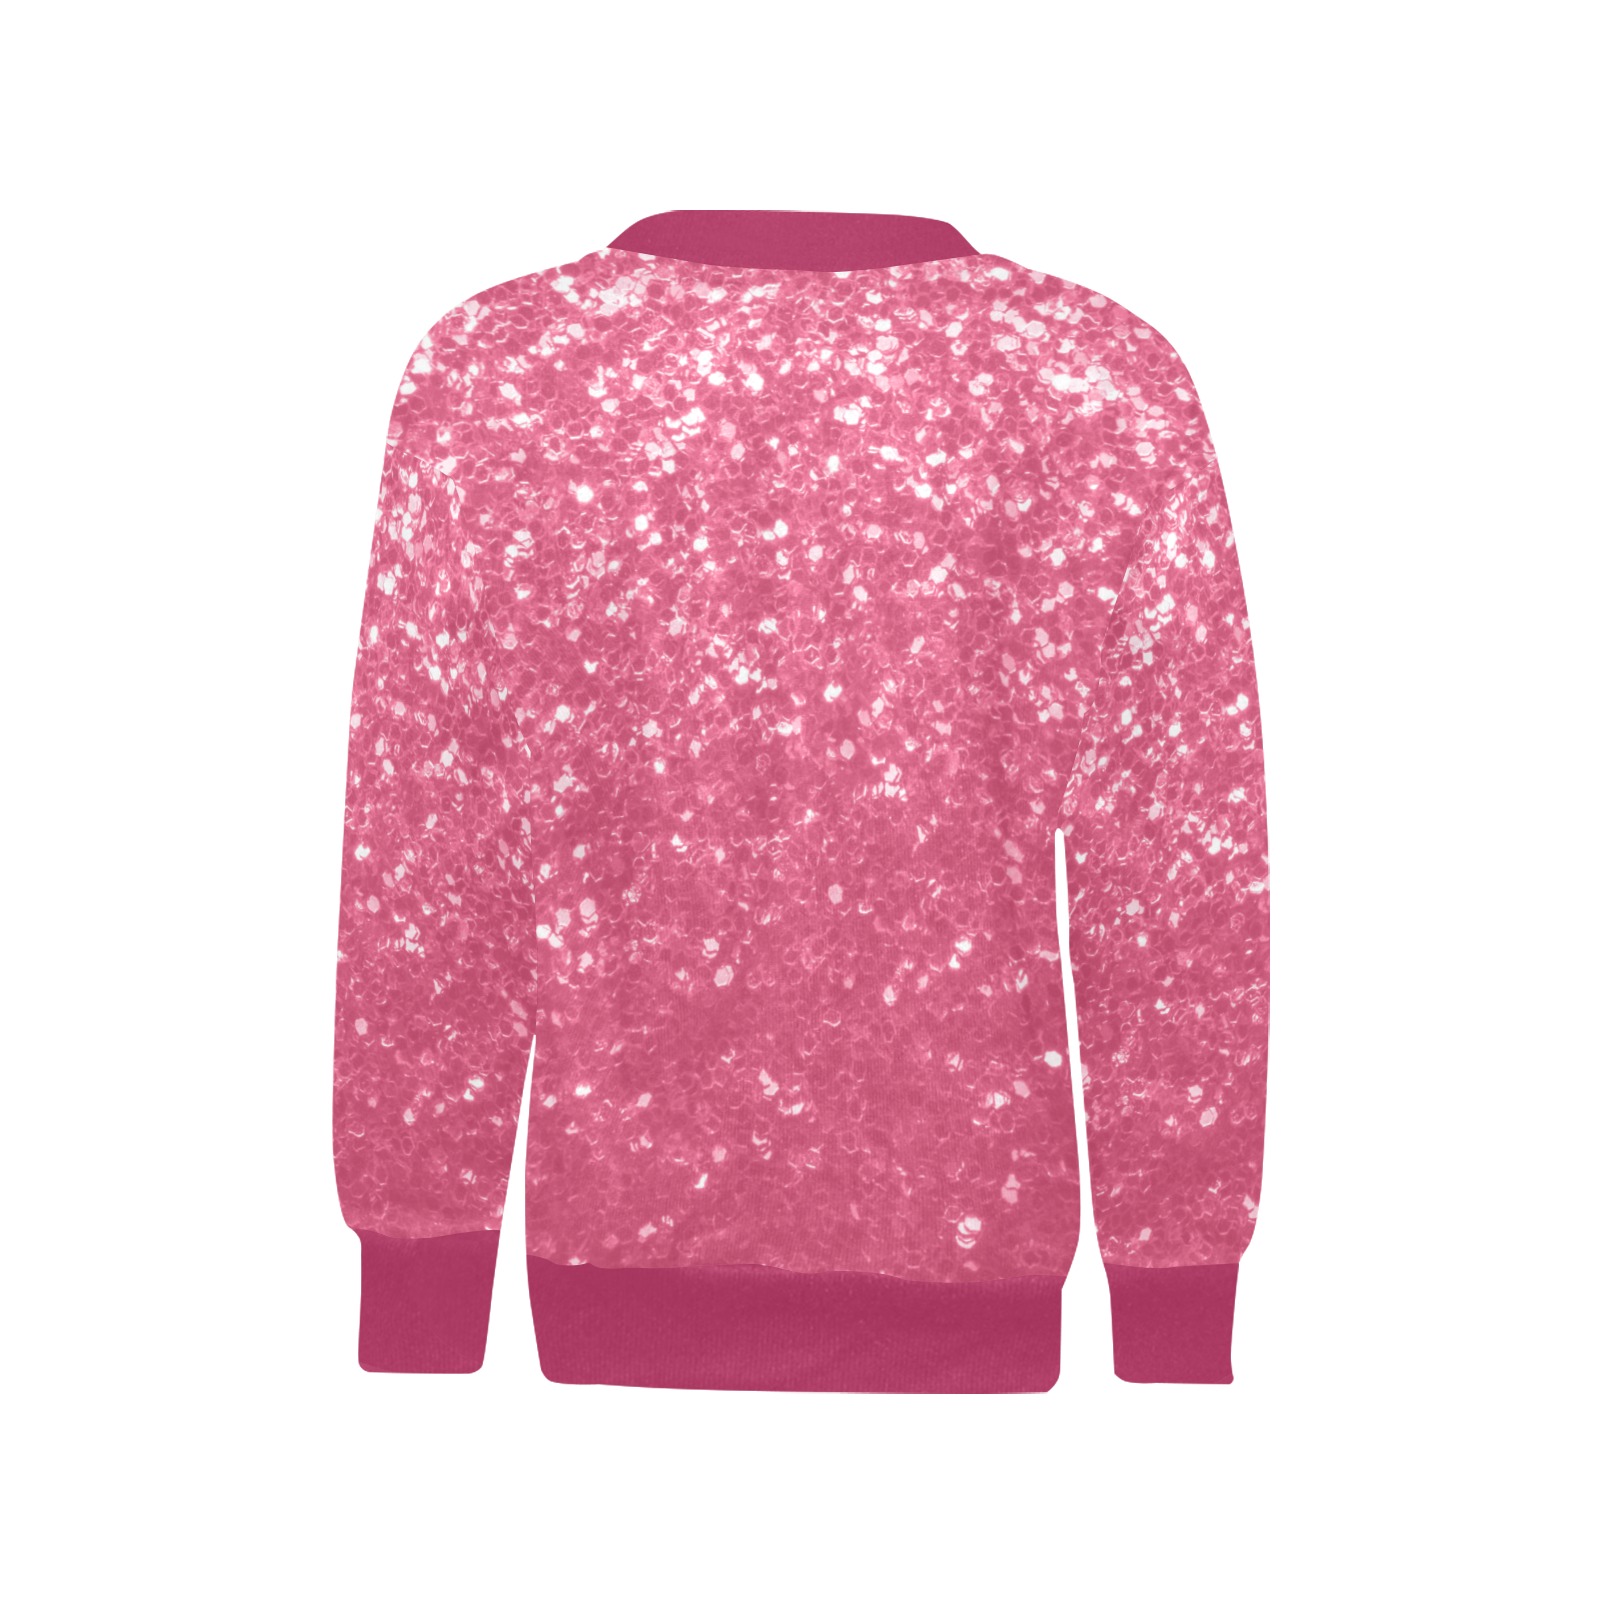 Magenta light pink red faux sparkles glitter Girls' All Over Print V-Neck Sweater (Model H48)